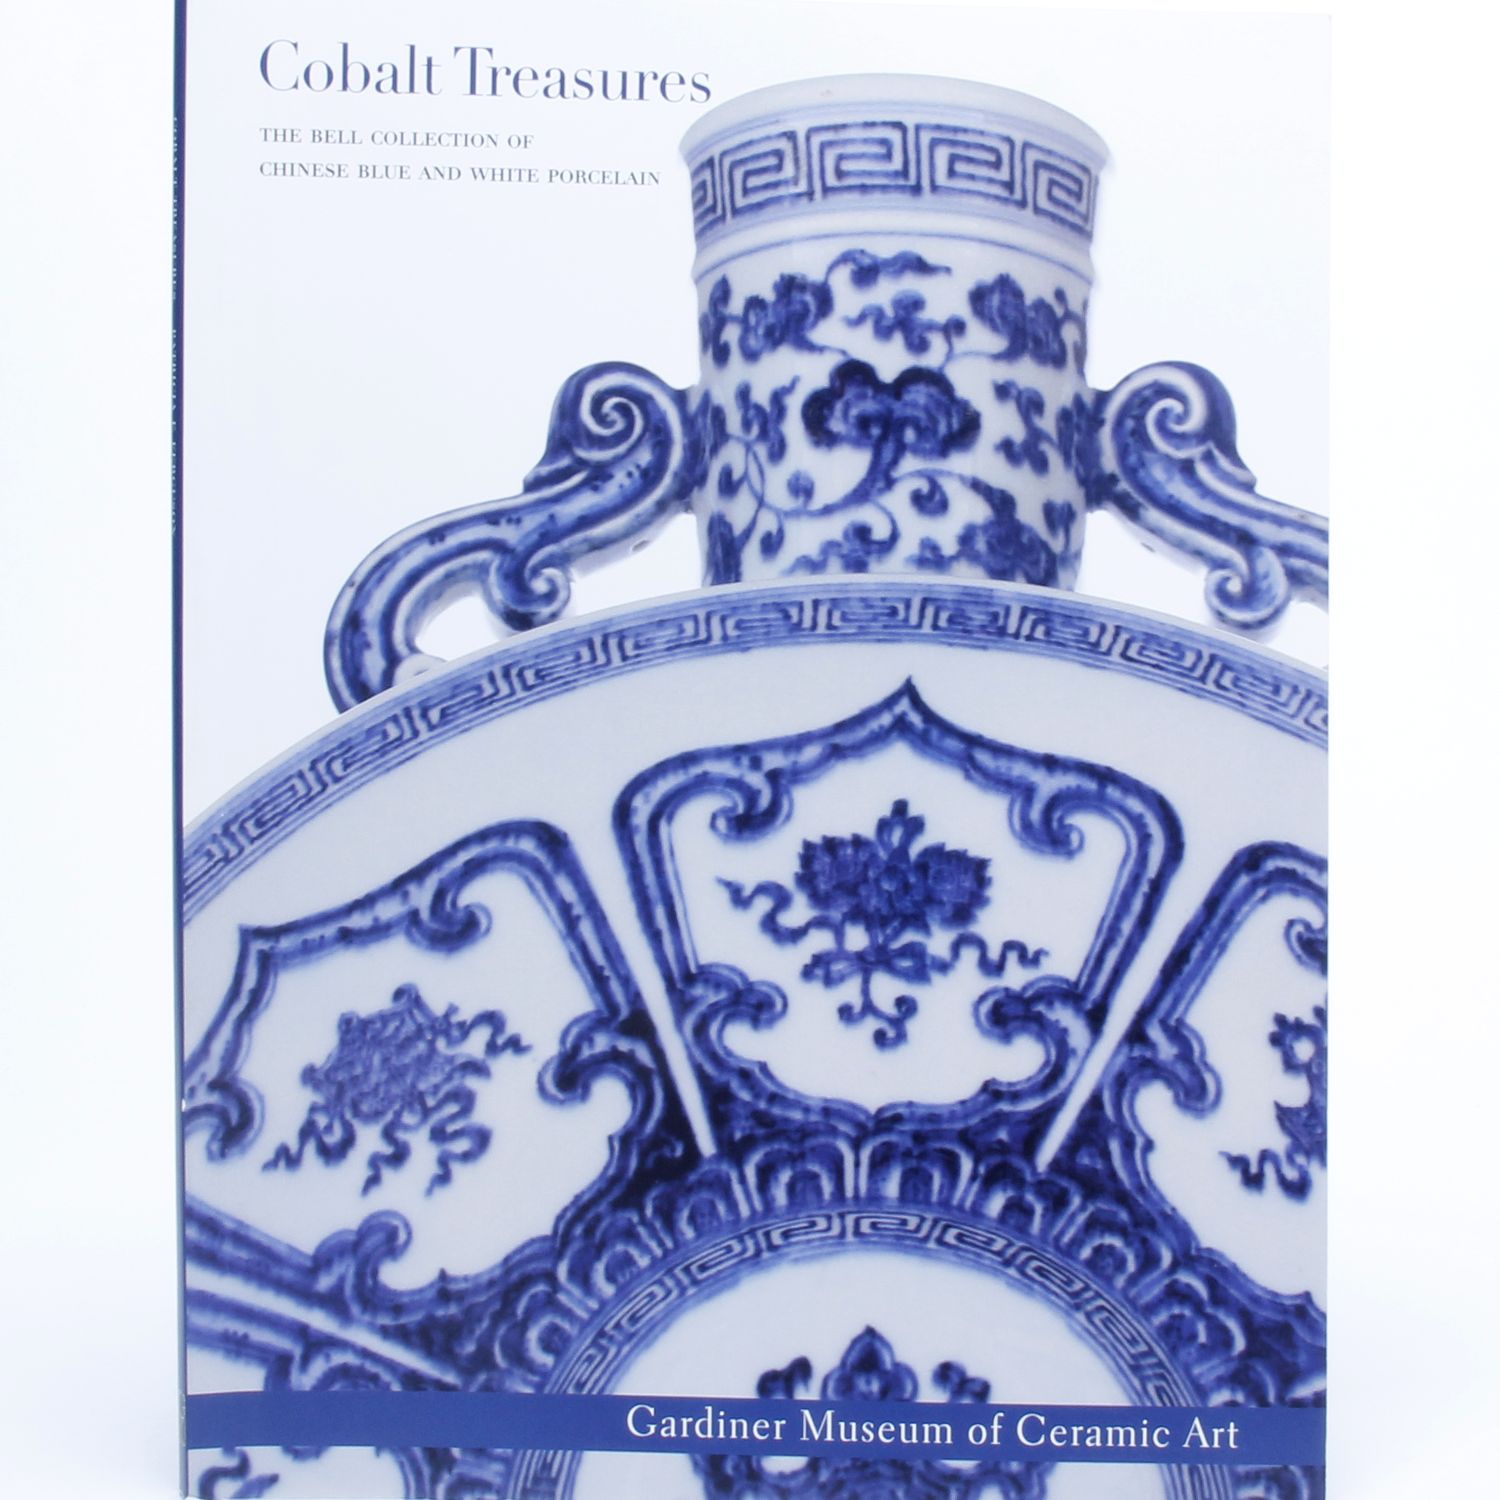 Gardiner Museum Catalogue: Cobalt Treasures Product Image 1 of 1